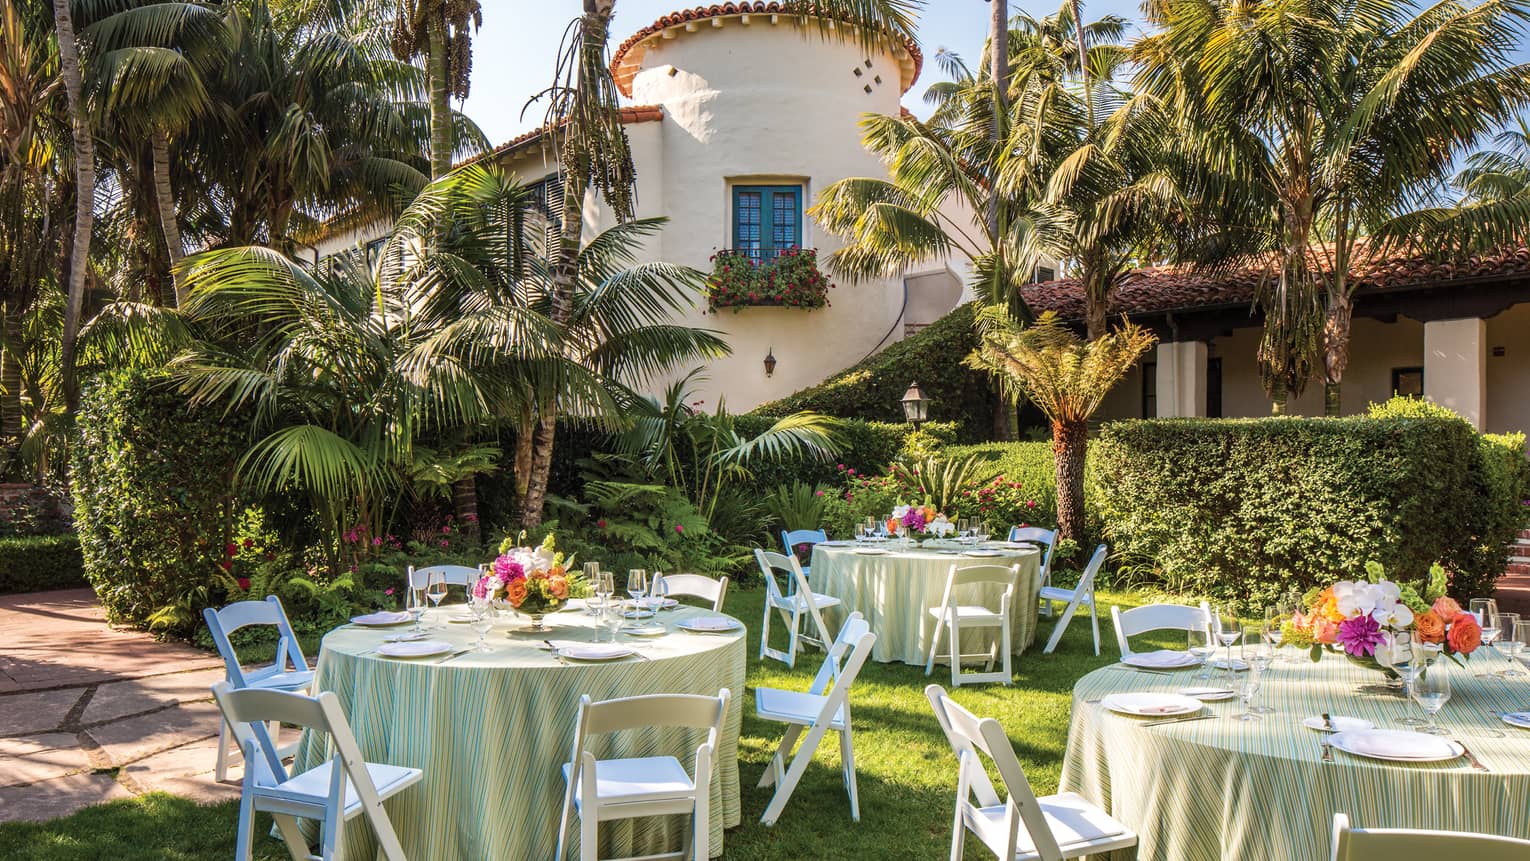 Escala Garden banquet tables on lawn under palm trees 